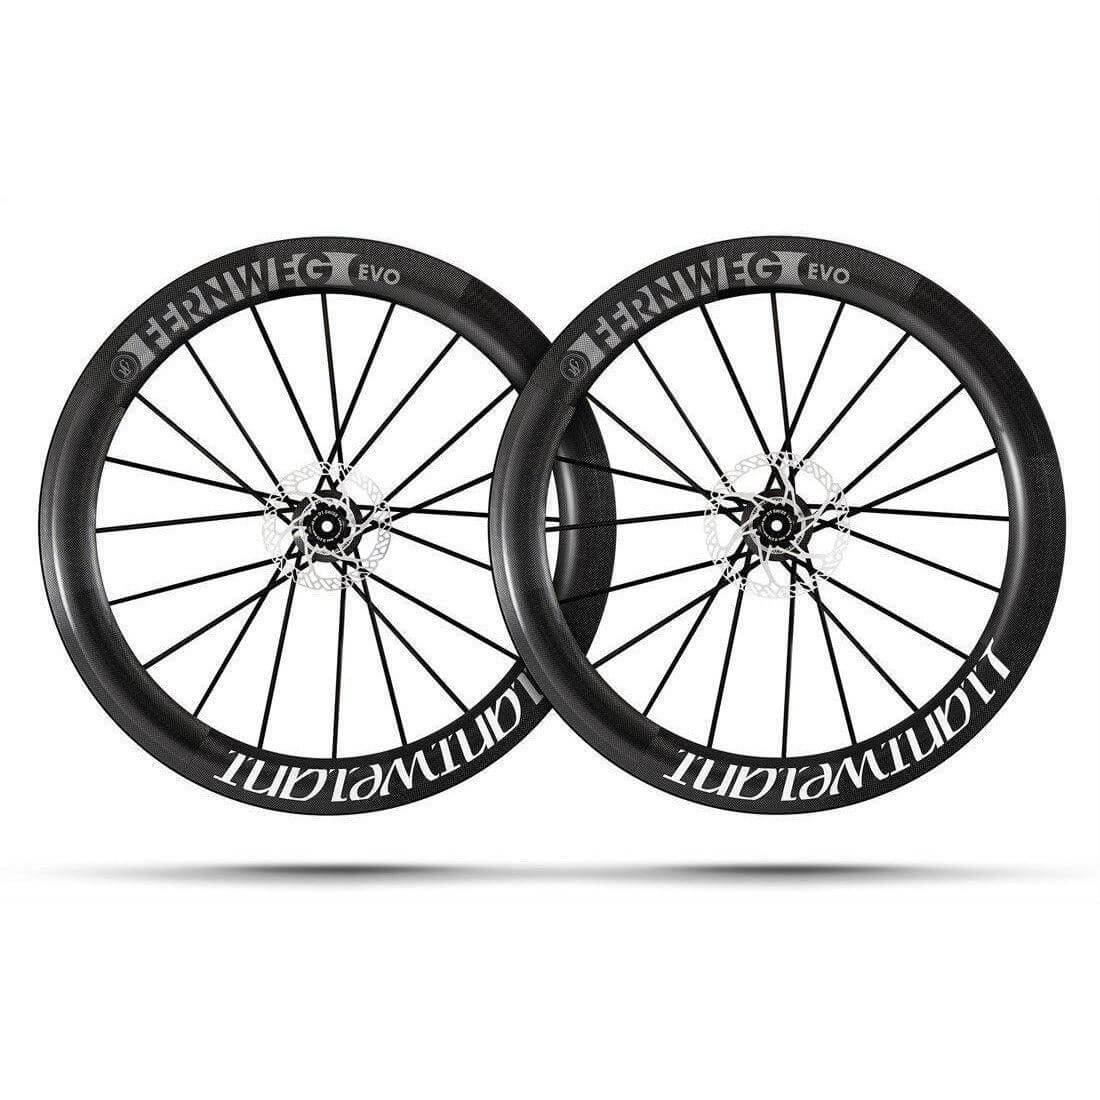 Lightweight Fernweg EVO Schwarz Edition | Strictly Bicycles